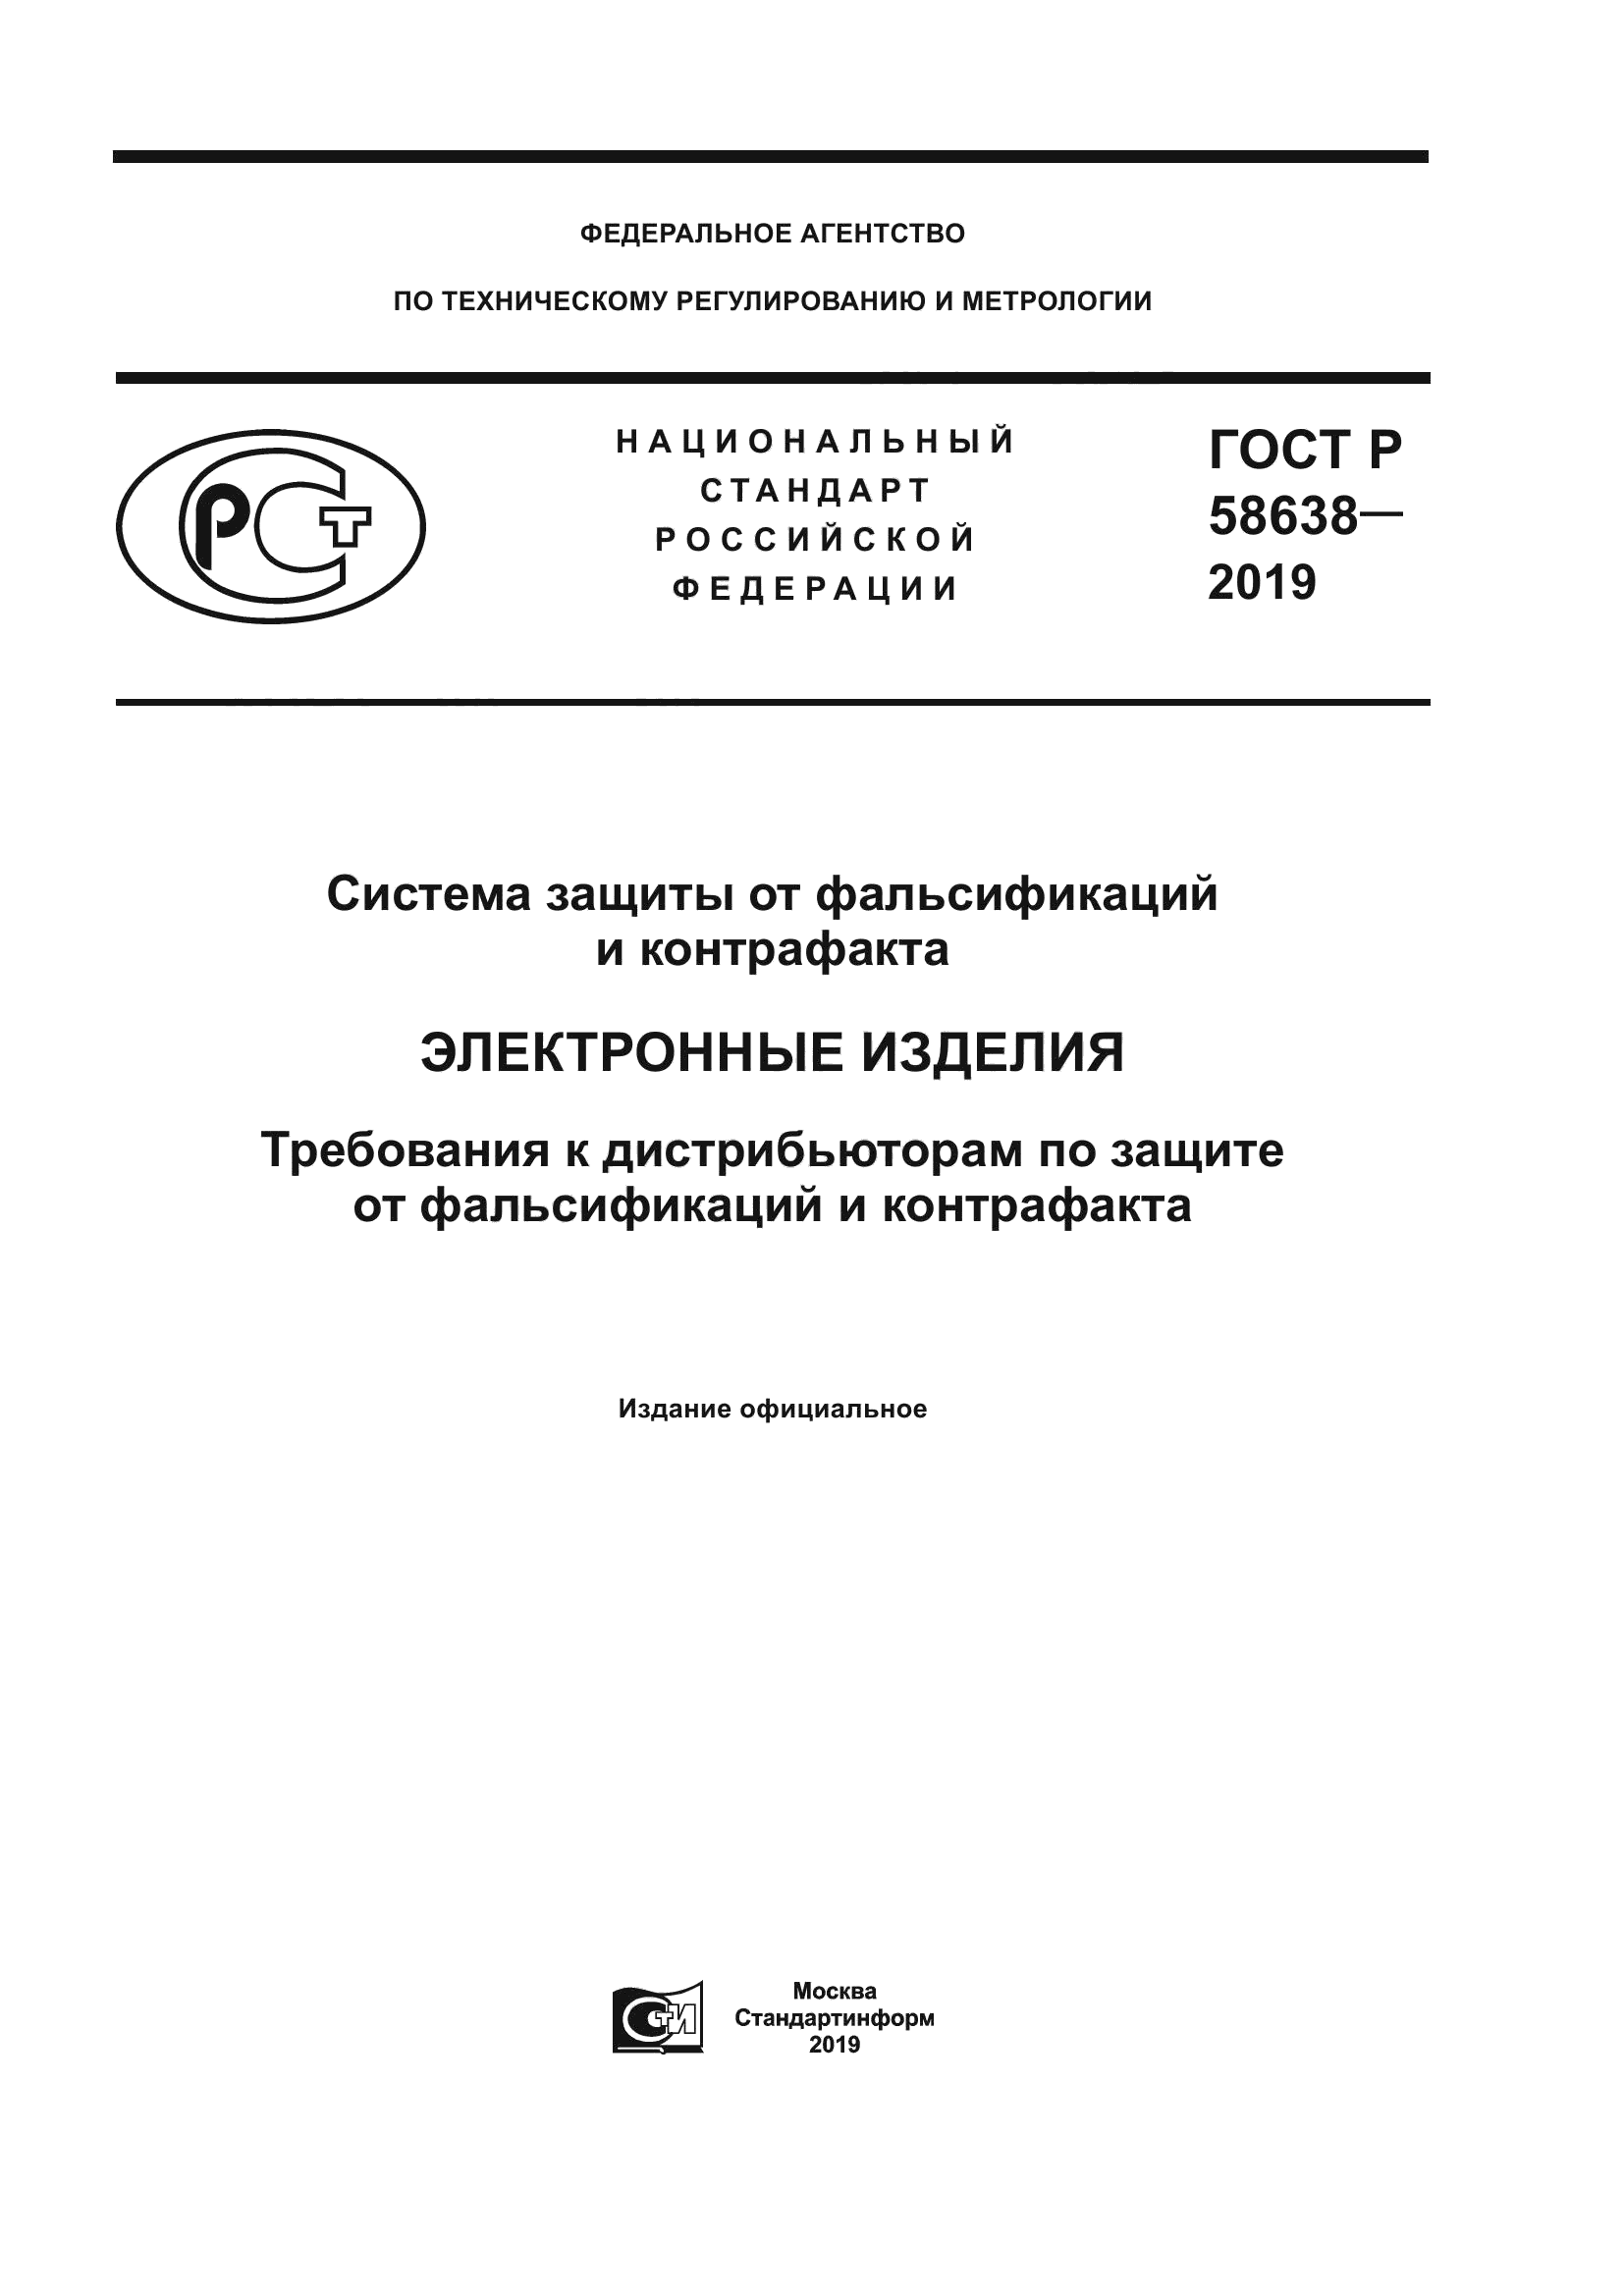 ГОСТ Р 58638-2019